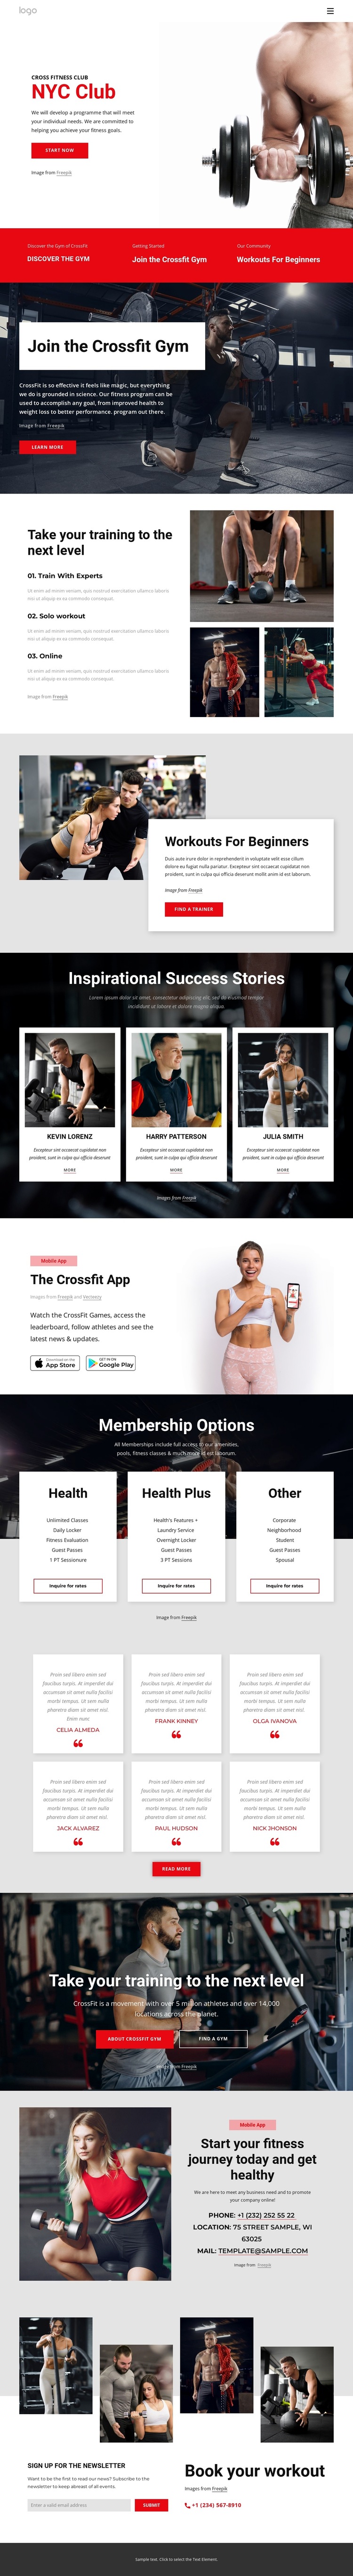 Cross fitness club HTML5 Template